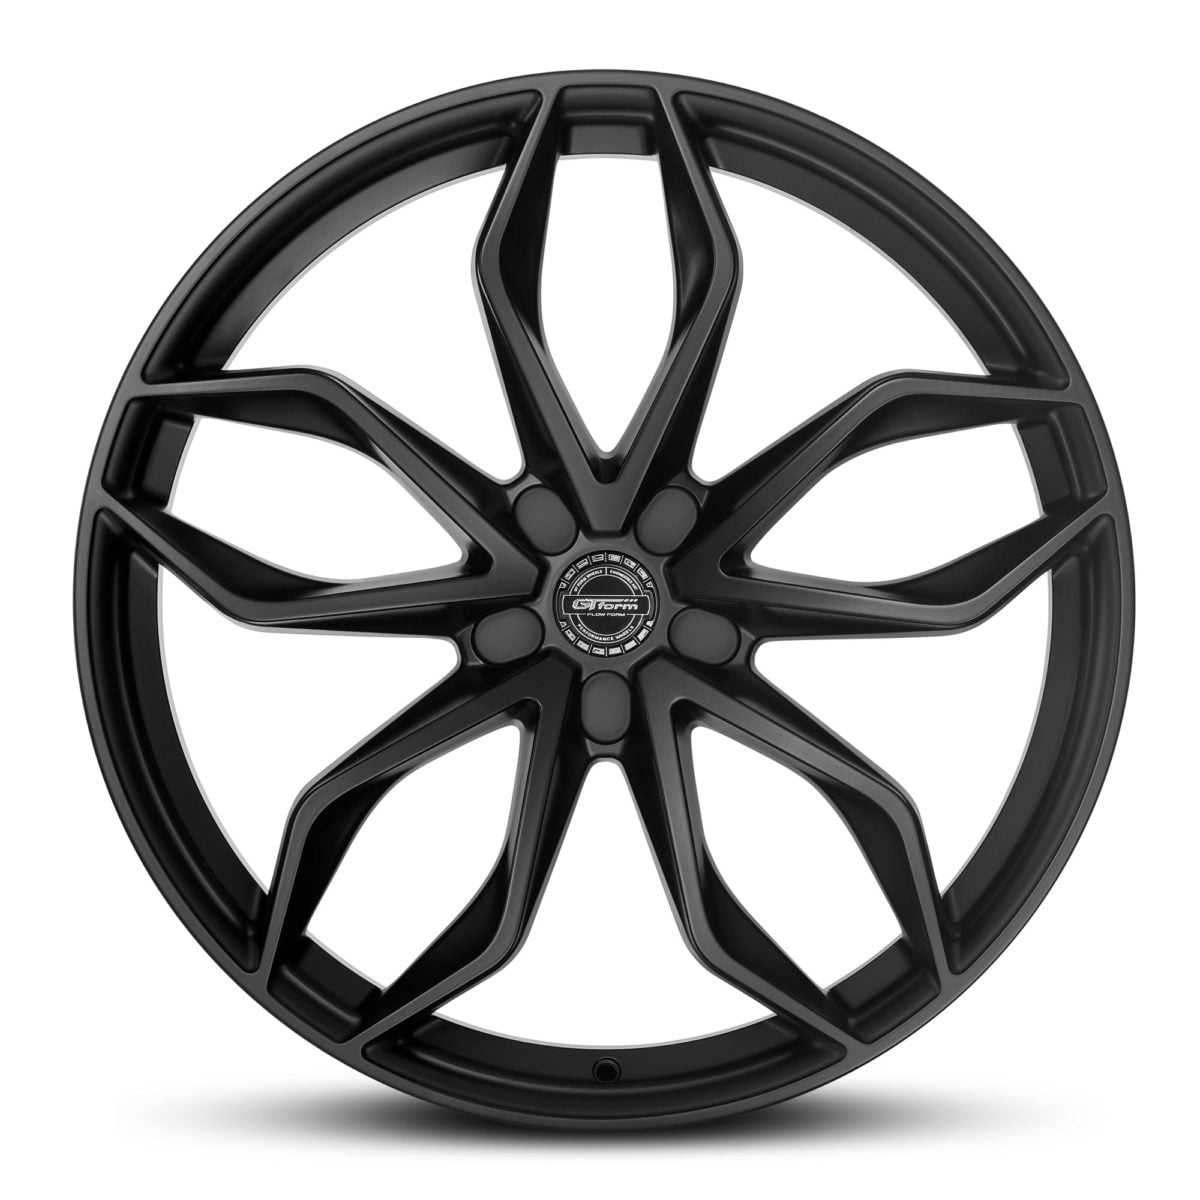 GT form Ghost Satin Black 22 inch Wheels Performance Rims